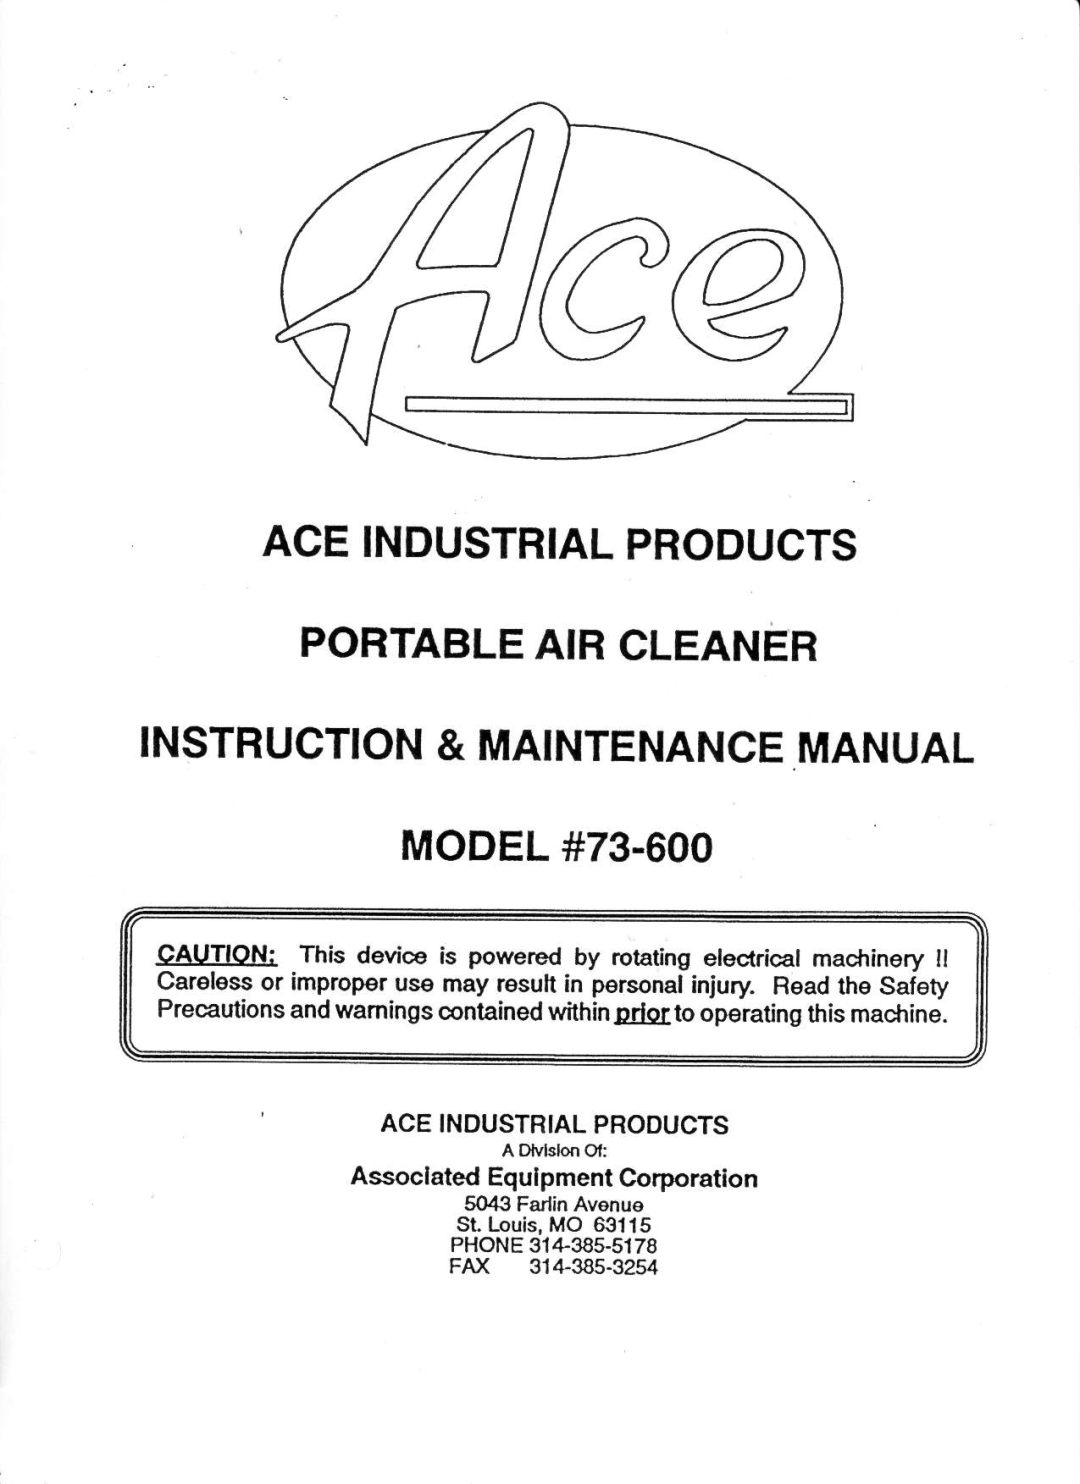 Associated Equipment manual INSTRUCTION& MAINTENANCEMANUAL MODEL#73-600, Aceindustrialproducts 